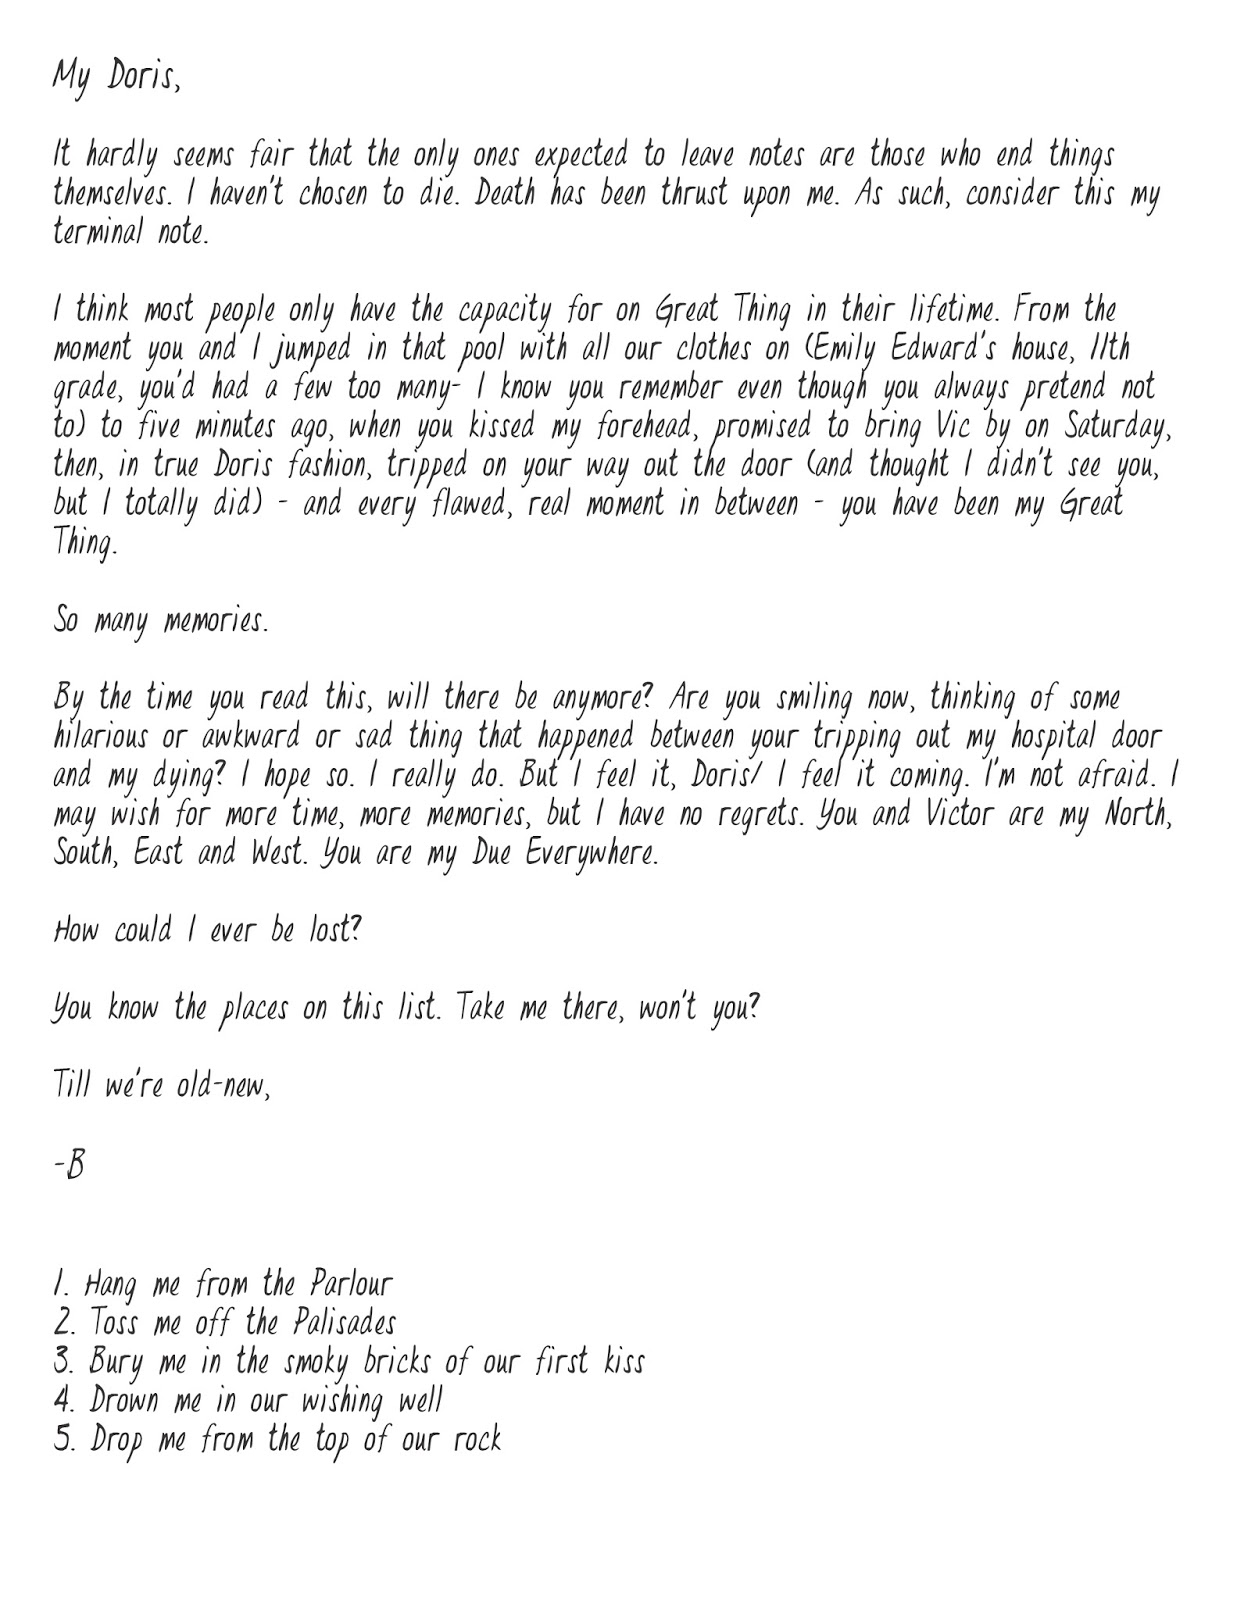 Bruno's Letter to Doris